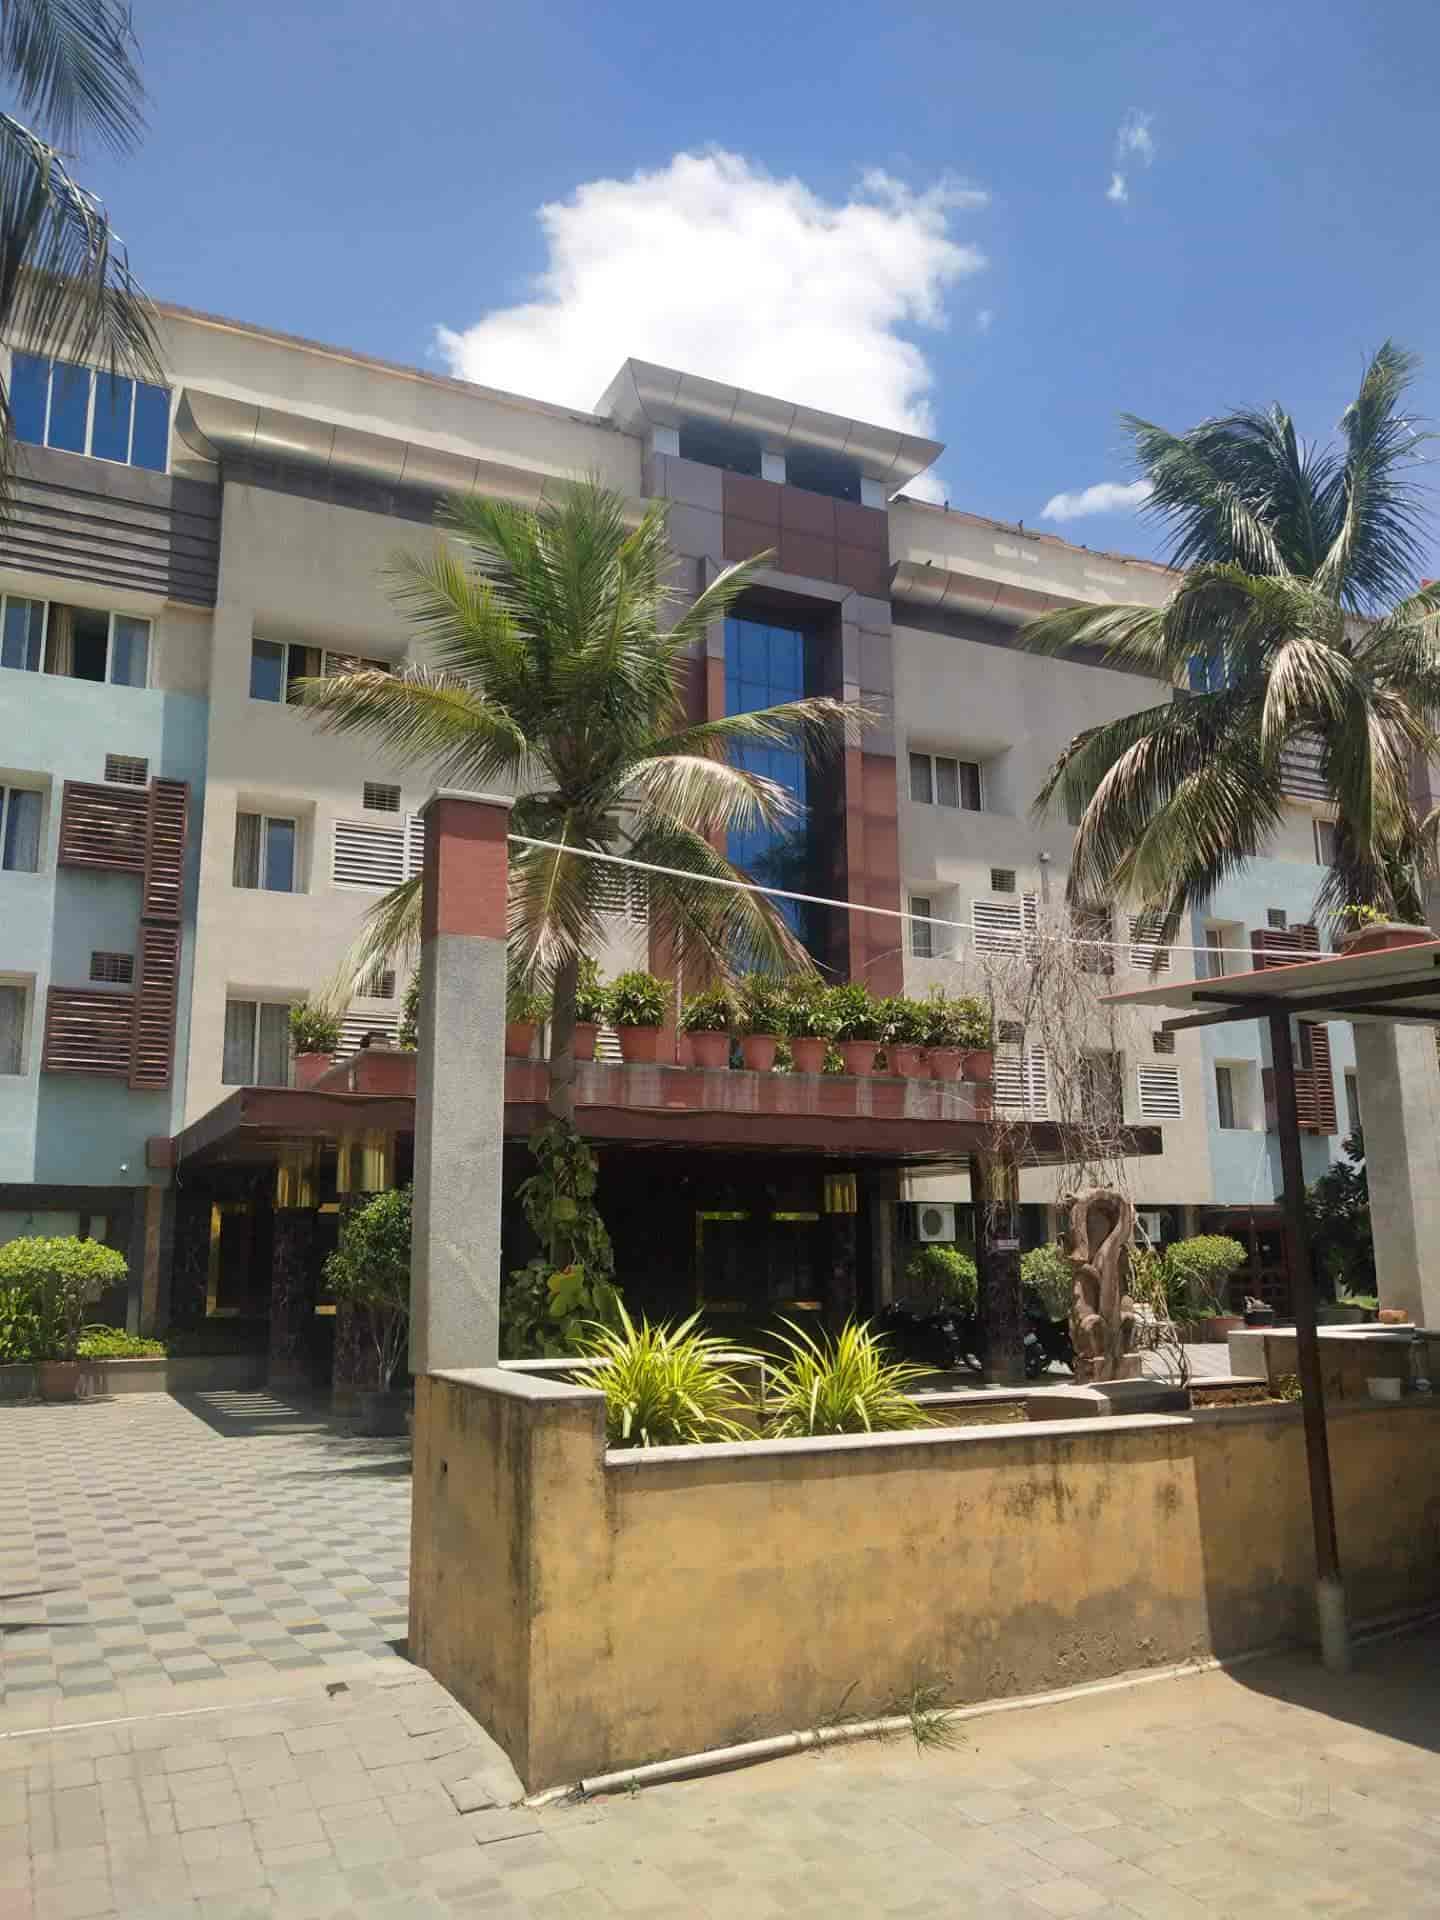 3 star hotels in tirumala hills